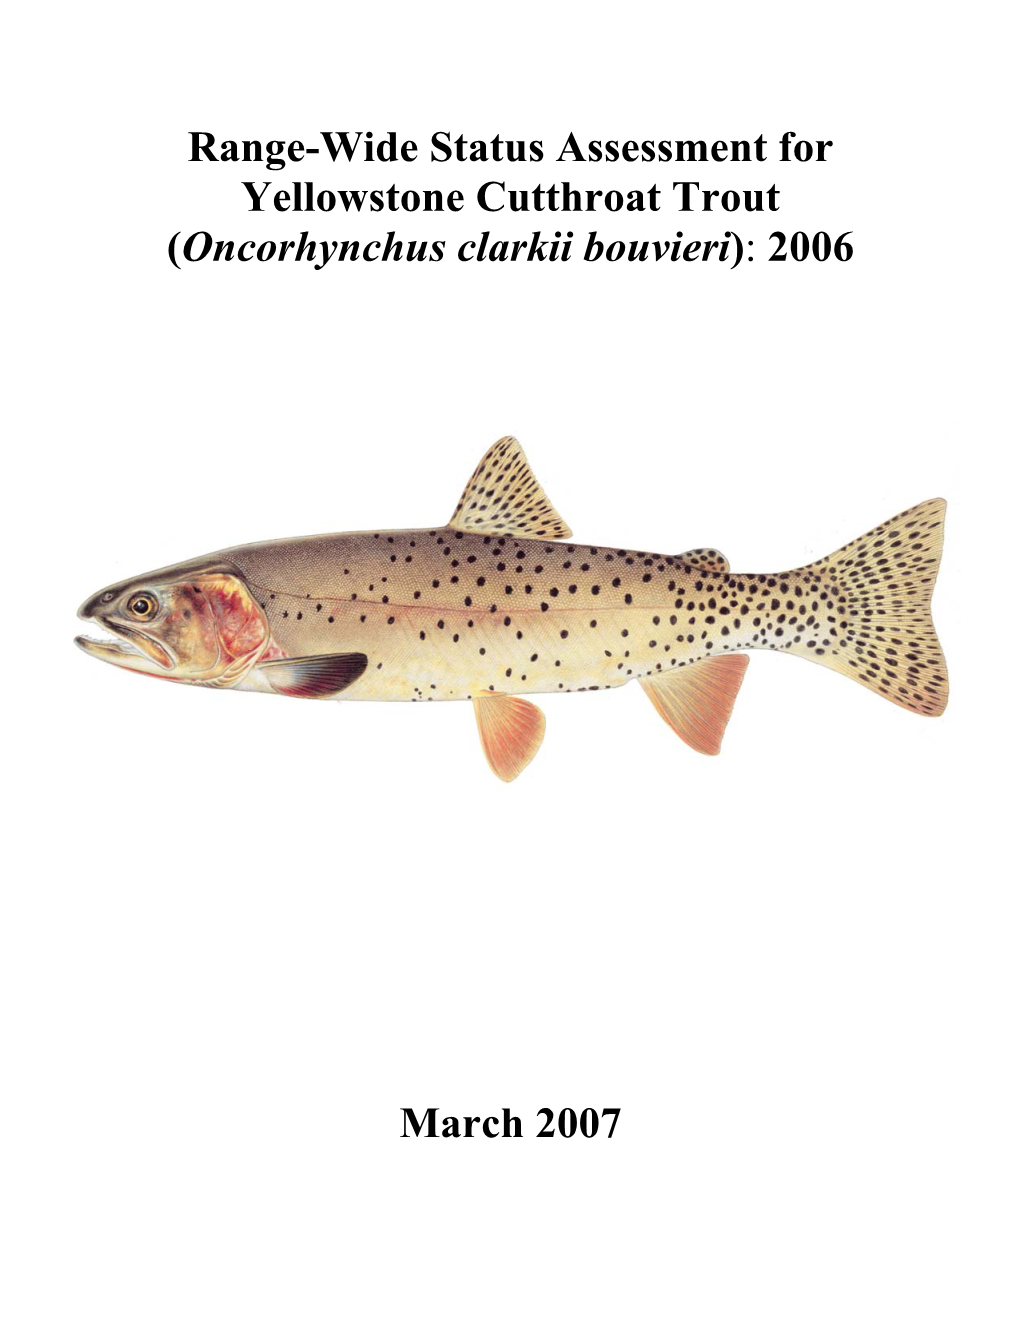 Range-Wide Status Assessment for Yellowstone Cutthroat Trout (Oncorhynchus Clarkii Bouvieri): 2006